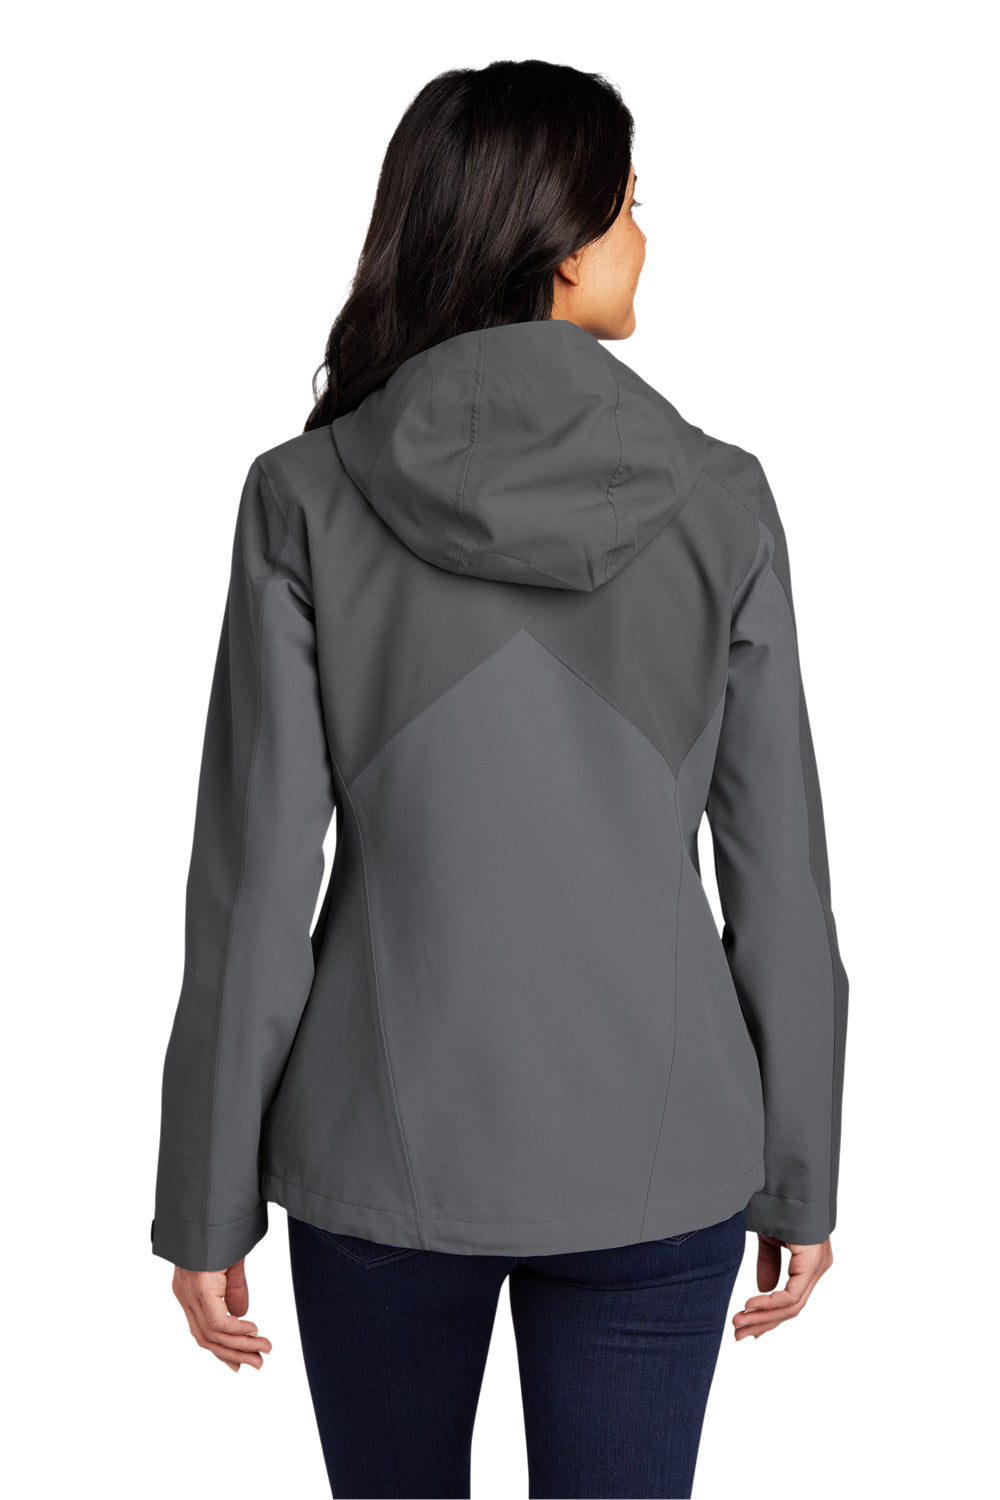 Port Authority Womens Tech Full Zip Hooded Rain Jacket Storm Grey/Shadow Grey Side